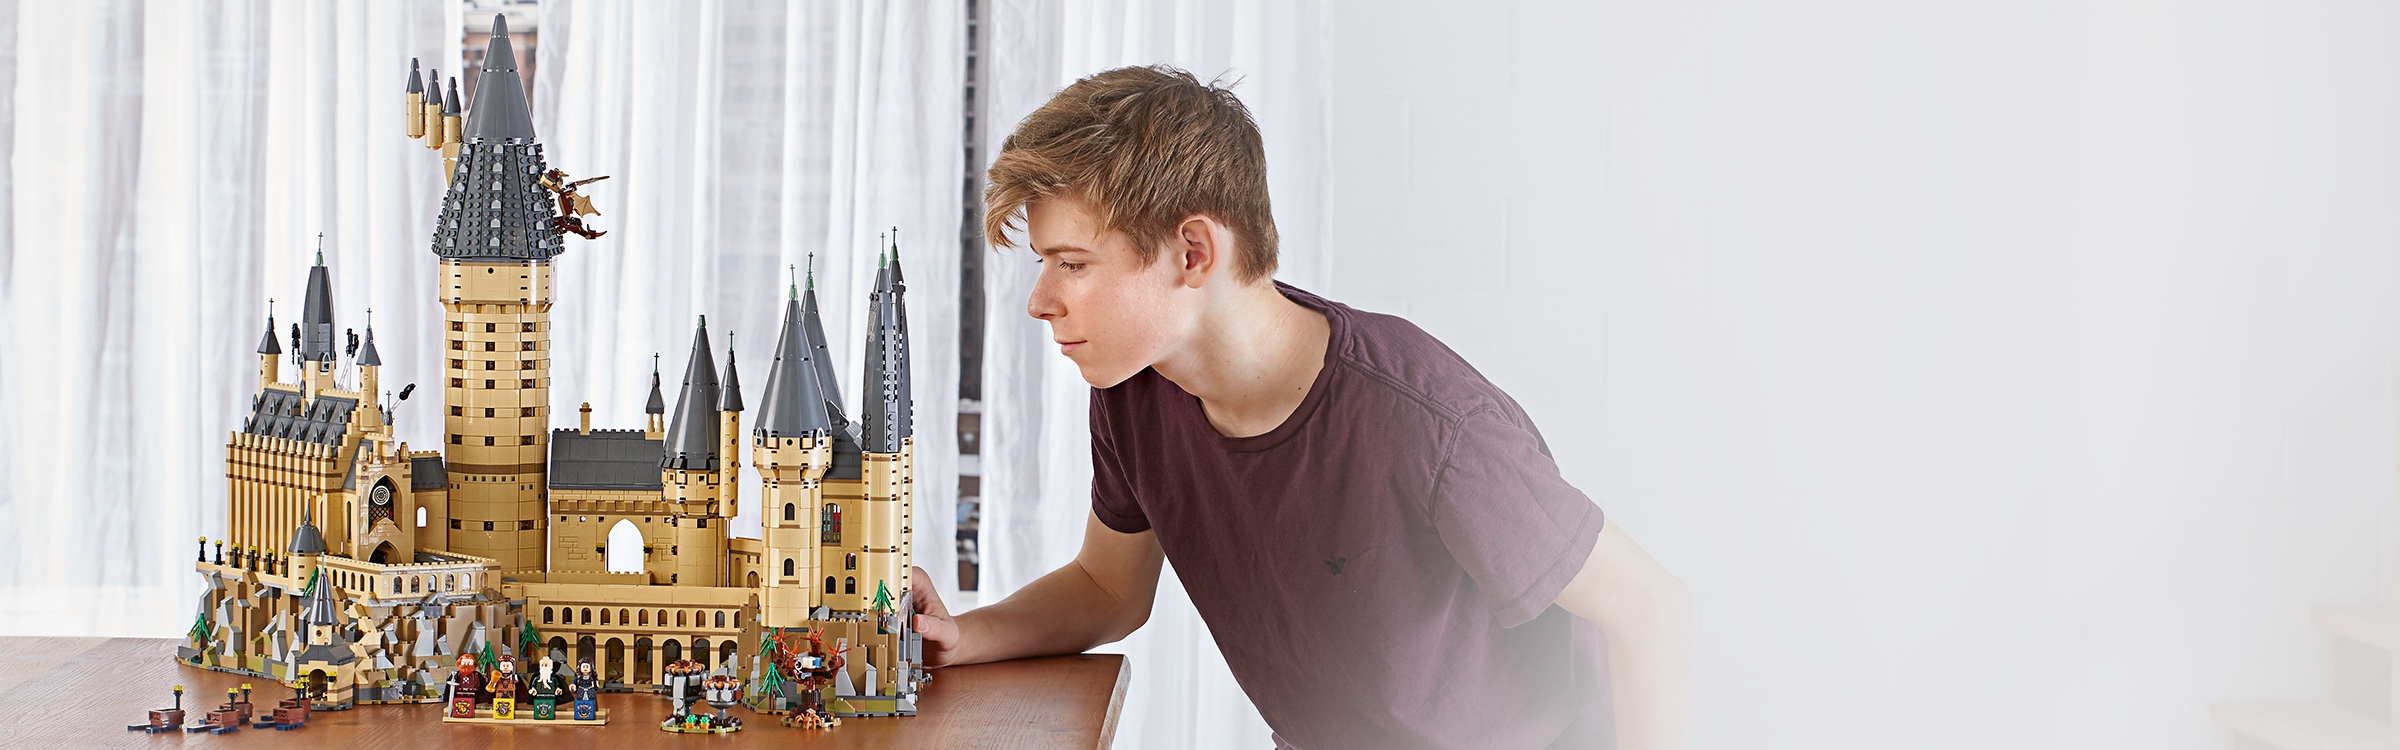 chateau harry potter lego dimension